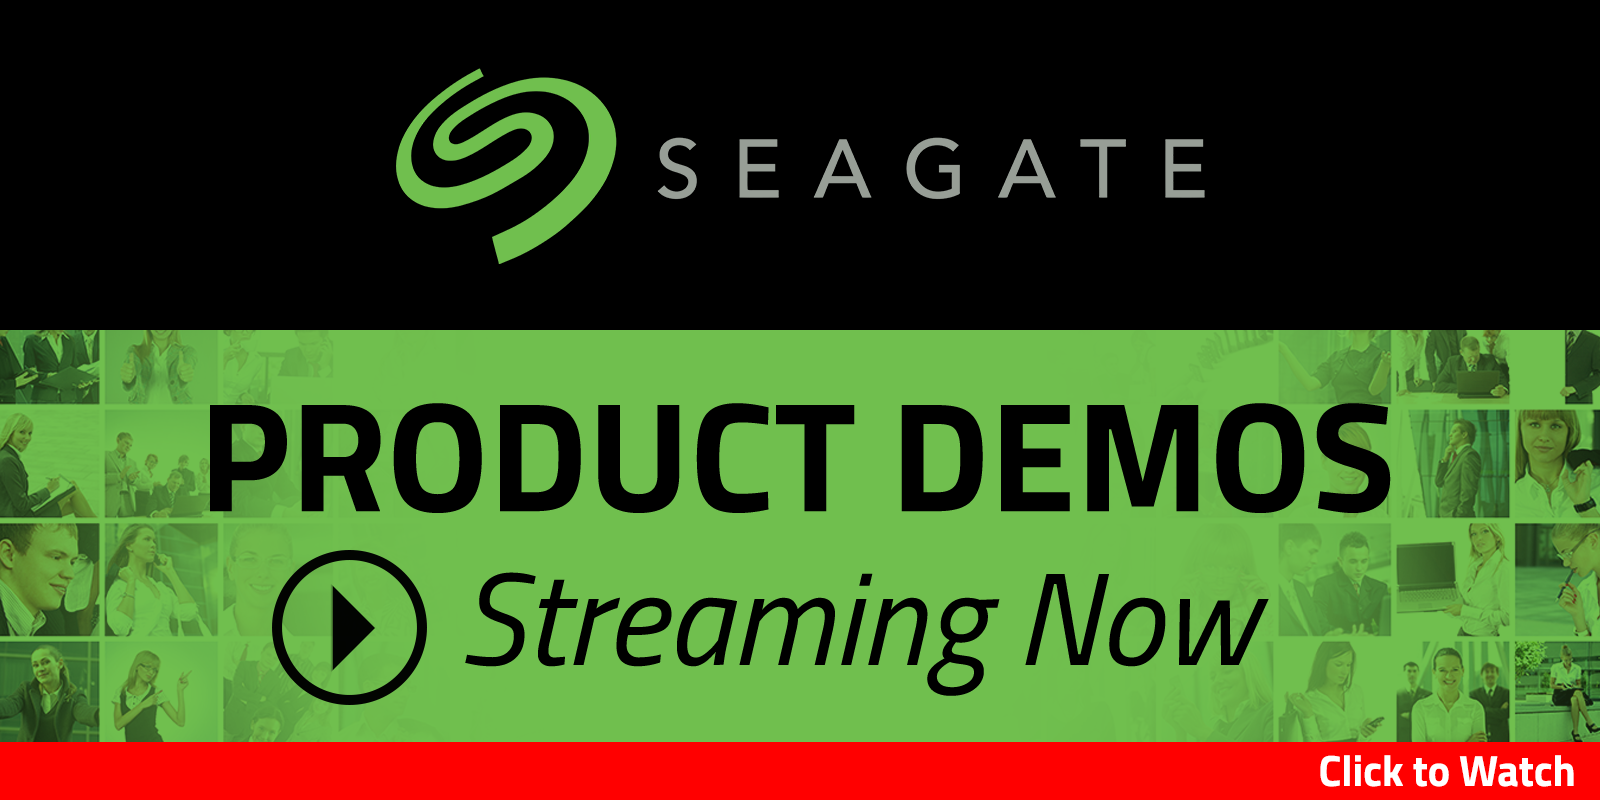 Seagate Demos on Demand